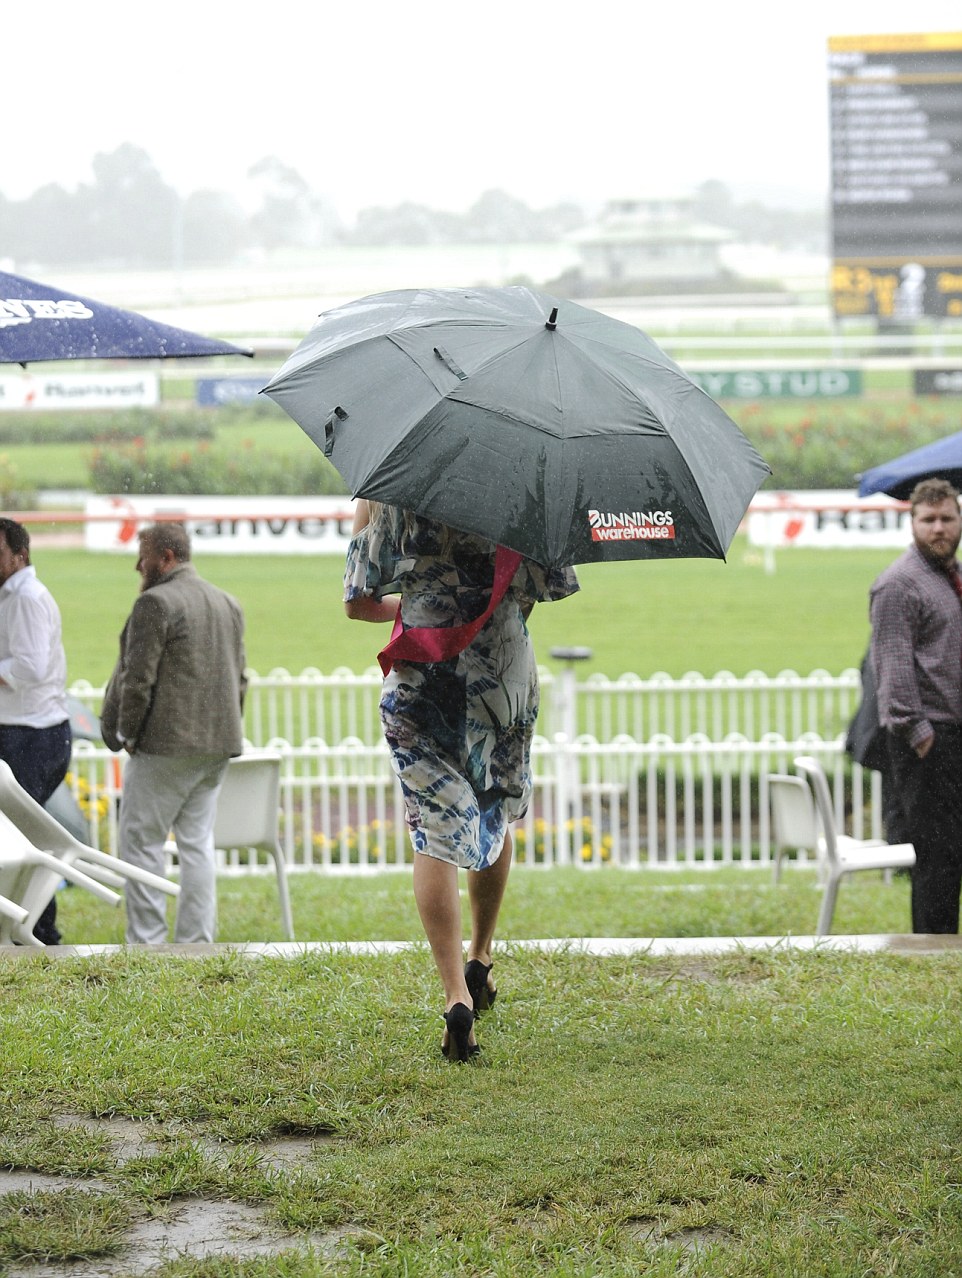 Bunnings umbrella being used at Sydney Golden Slipper Races